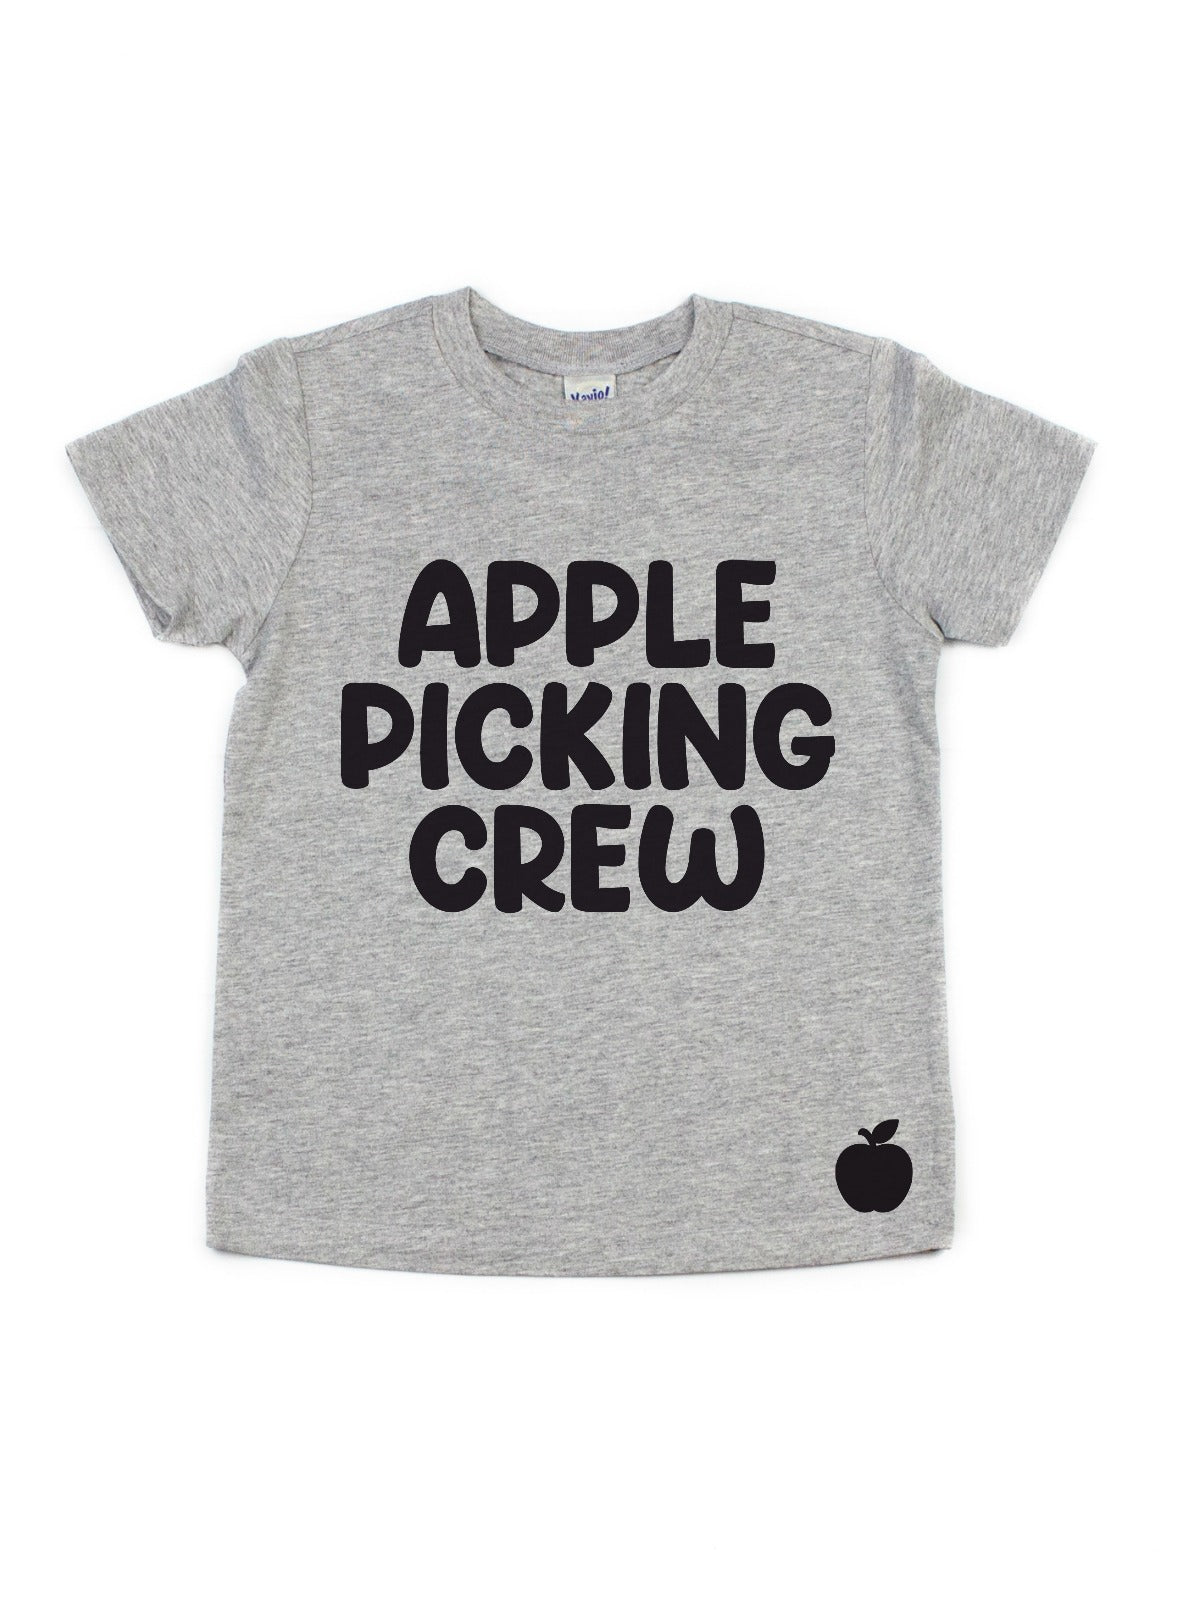 heather gray apple picking shirt for kids